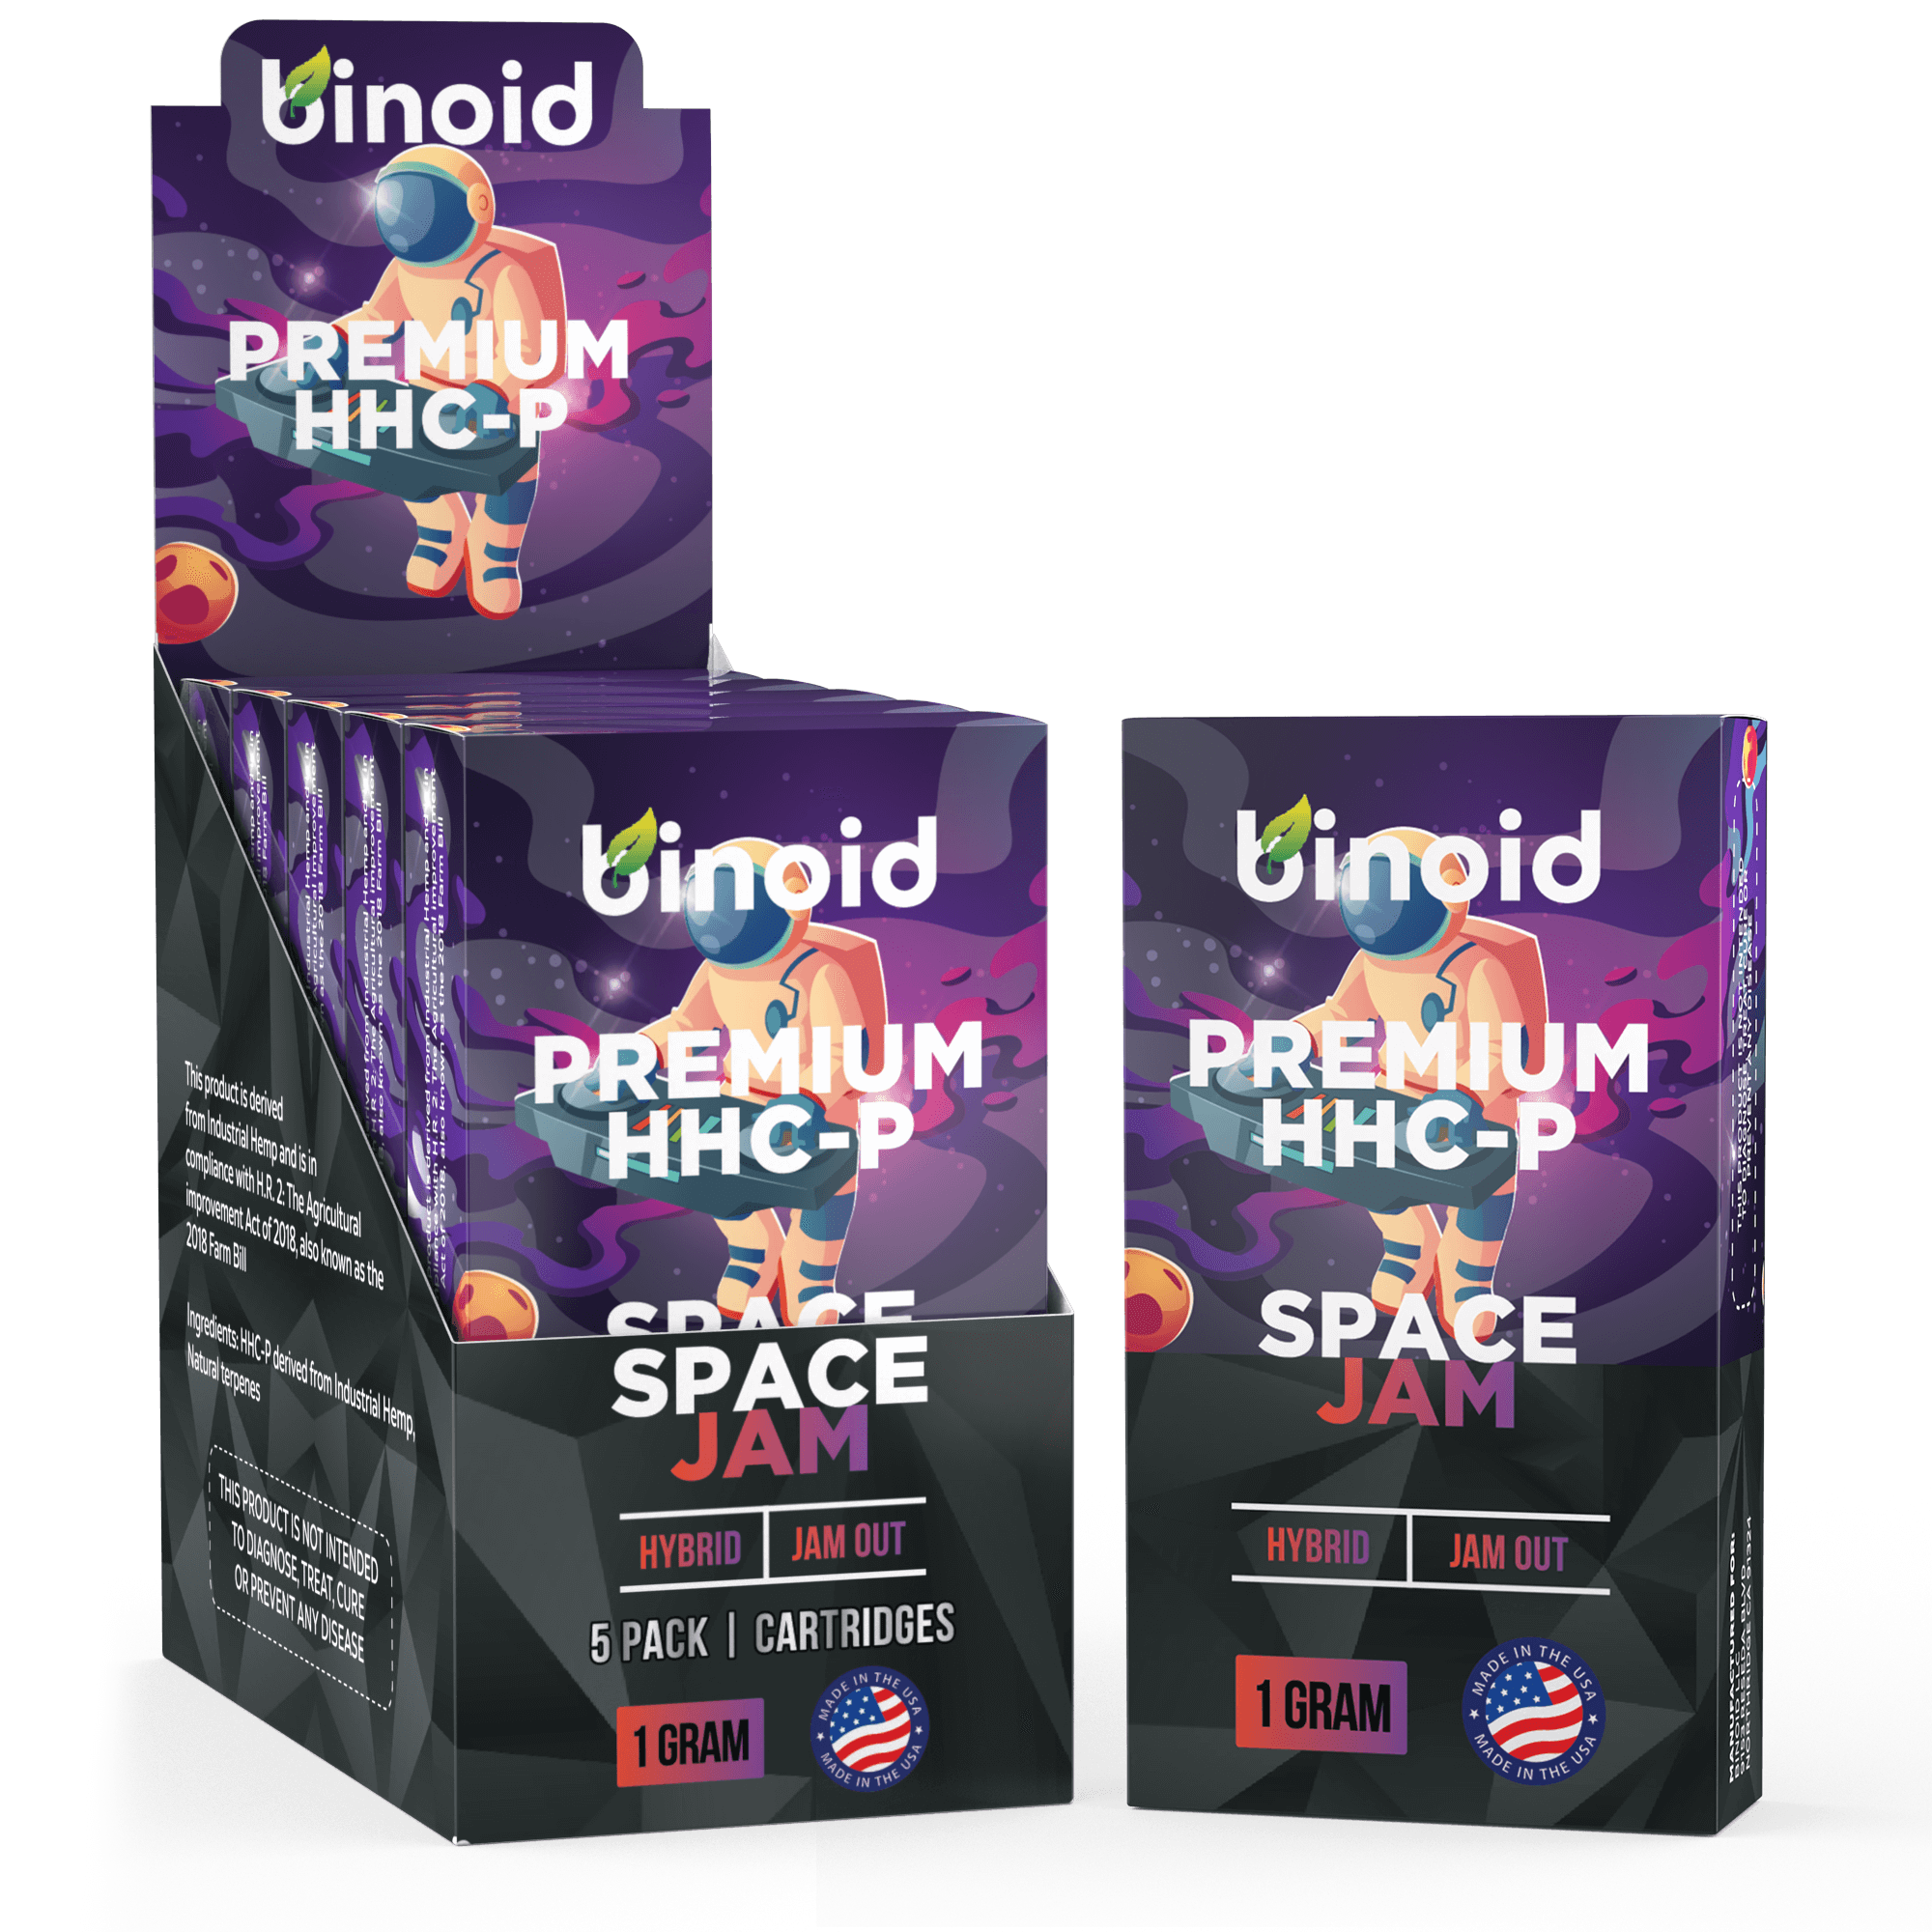 Binoid HHC-P Vape Cartridge - Space Jam Best Price